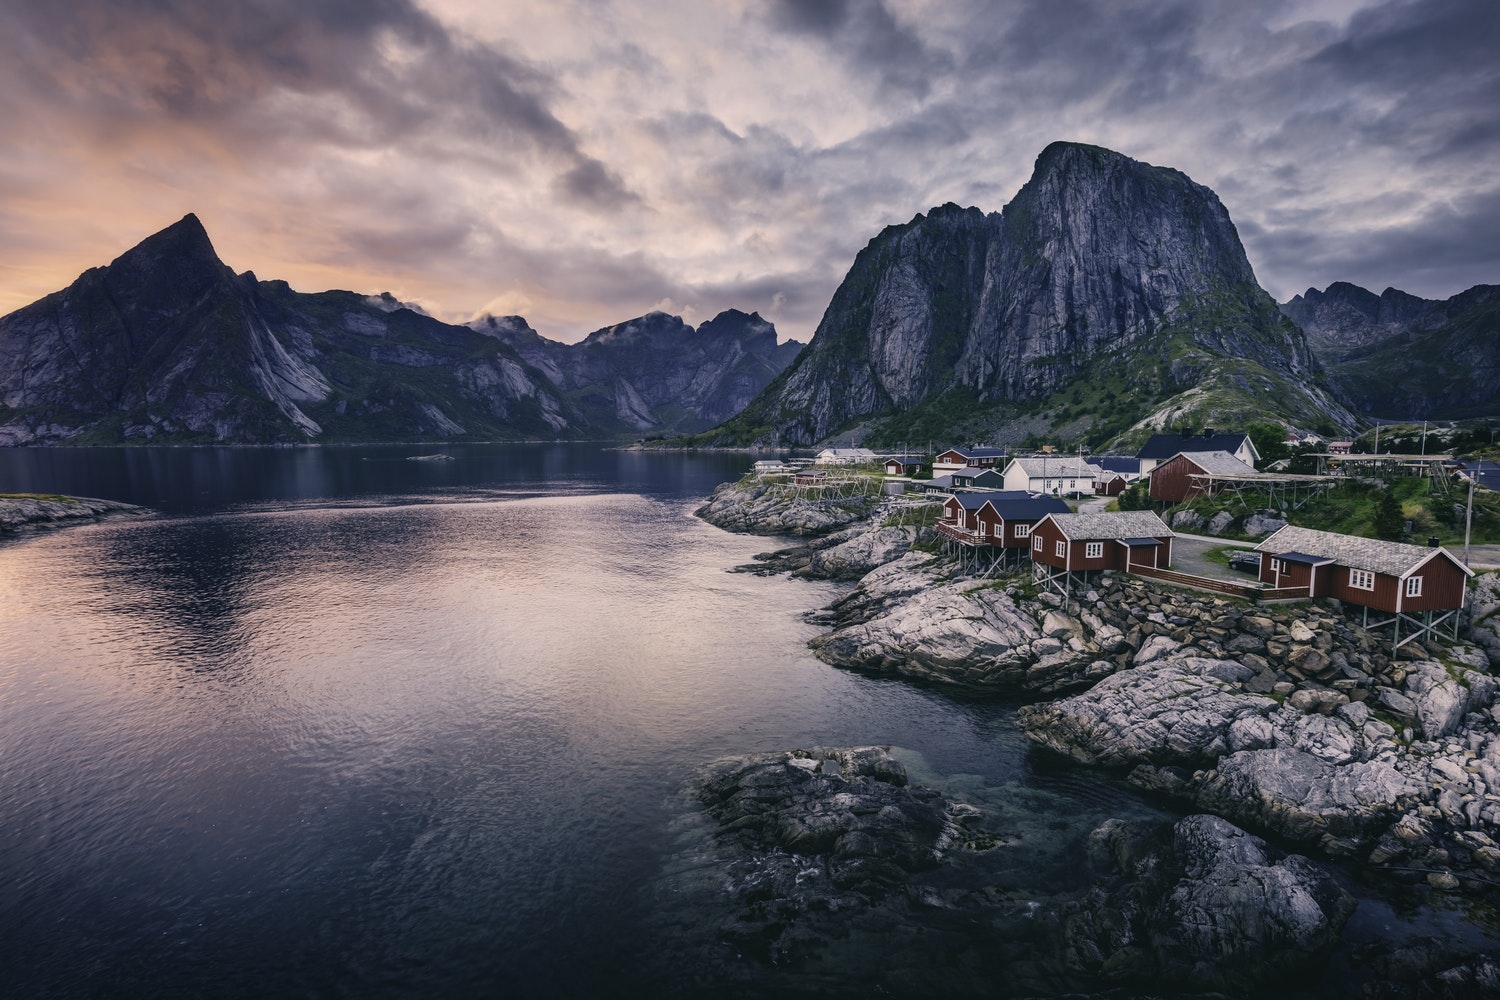  Dream wedding location in Norway 